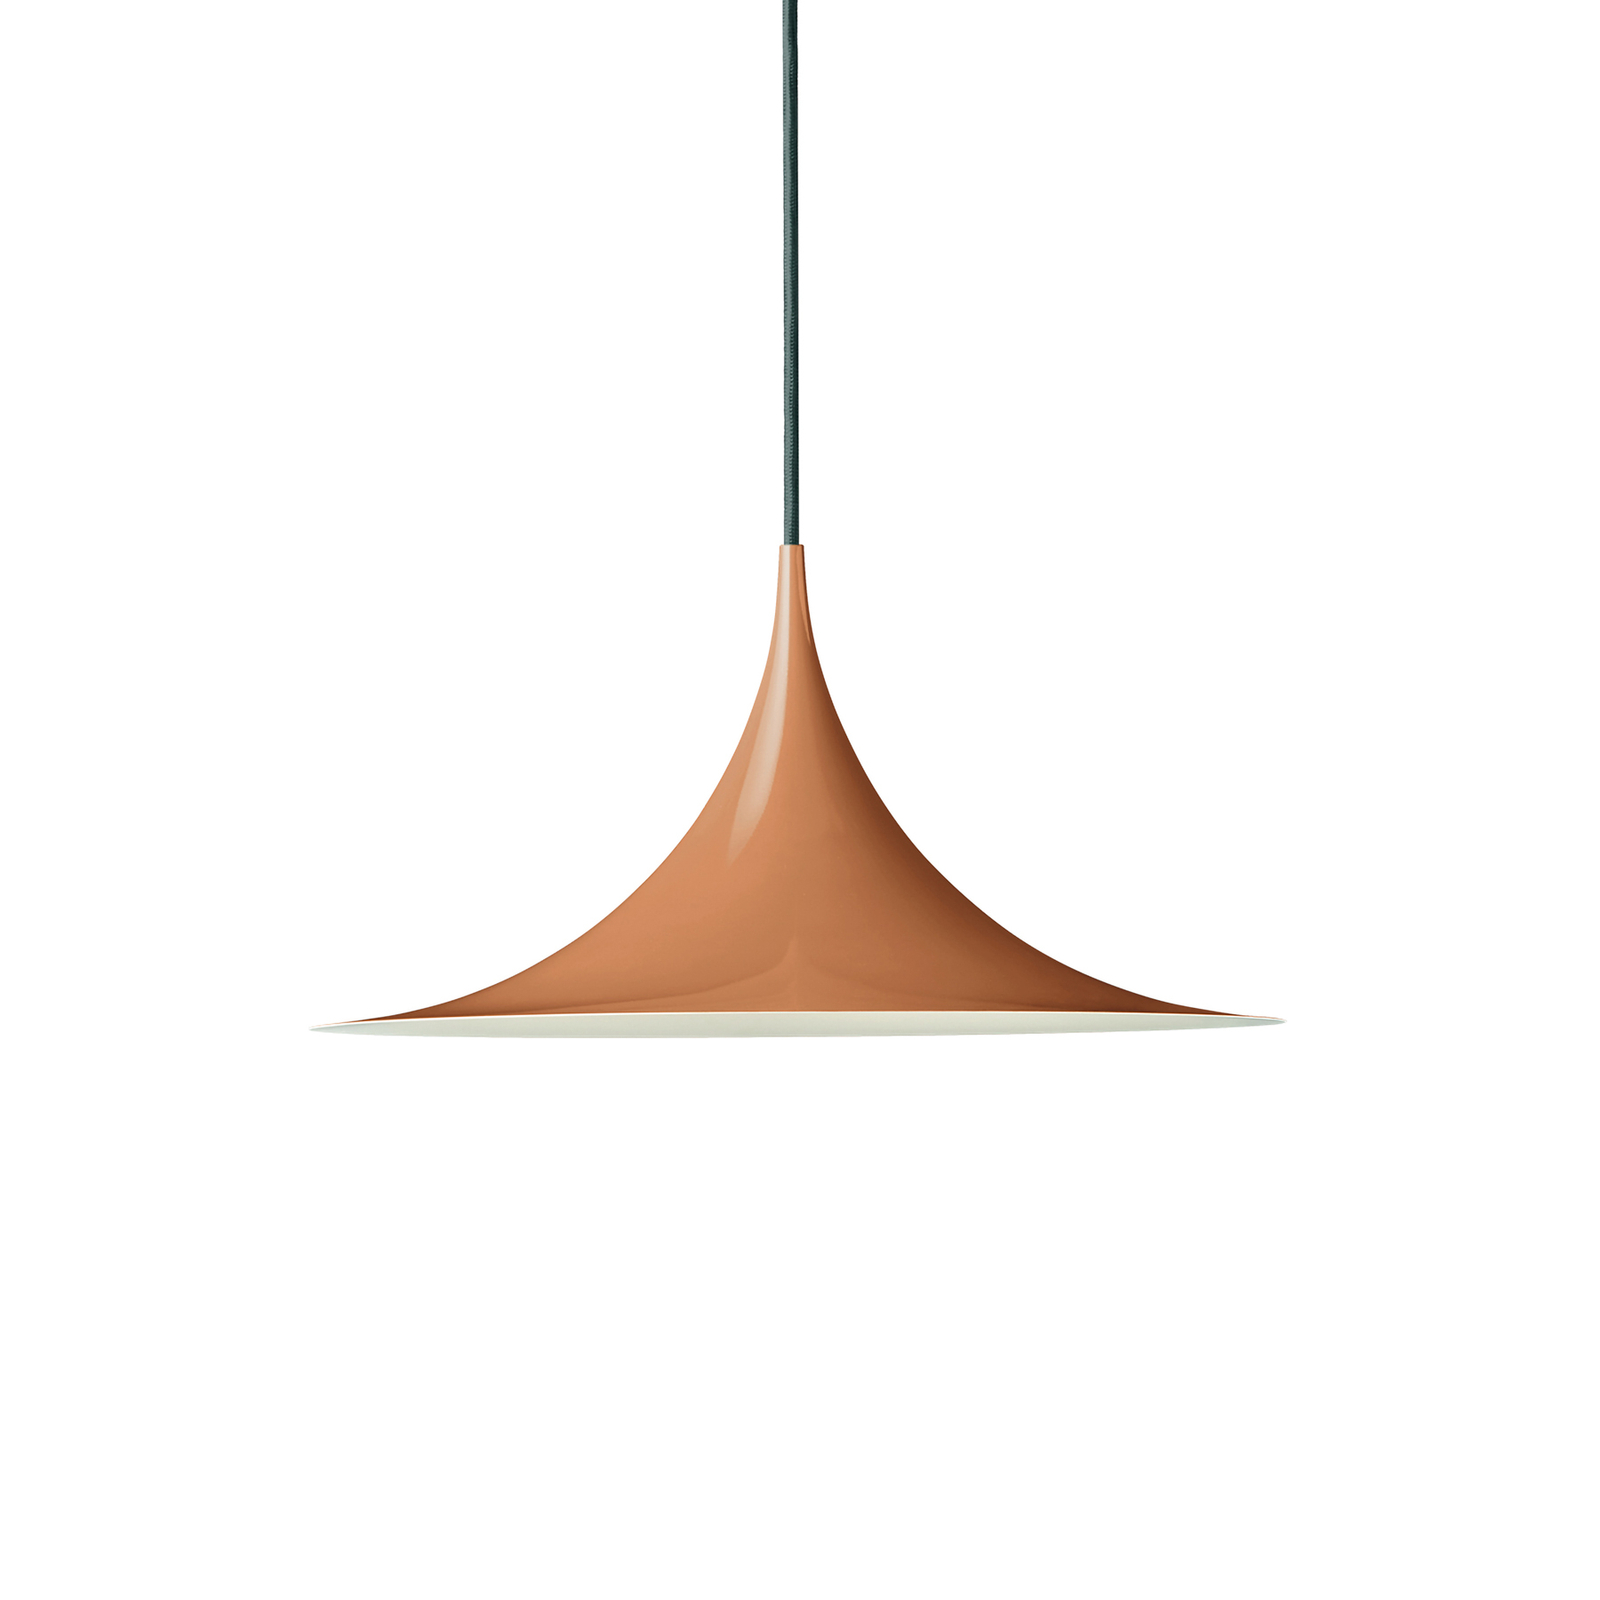 Gubi Semi hanglamp, Ø 30 cm, pompoenroest bruin glanzend